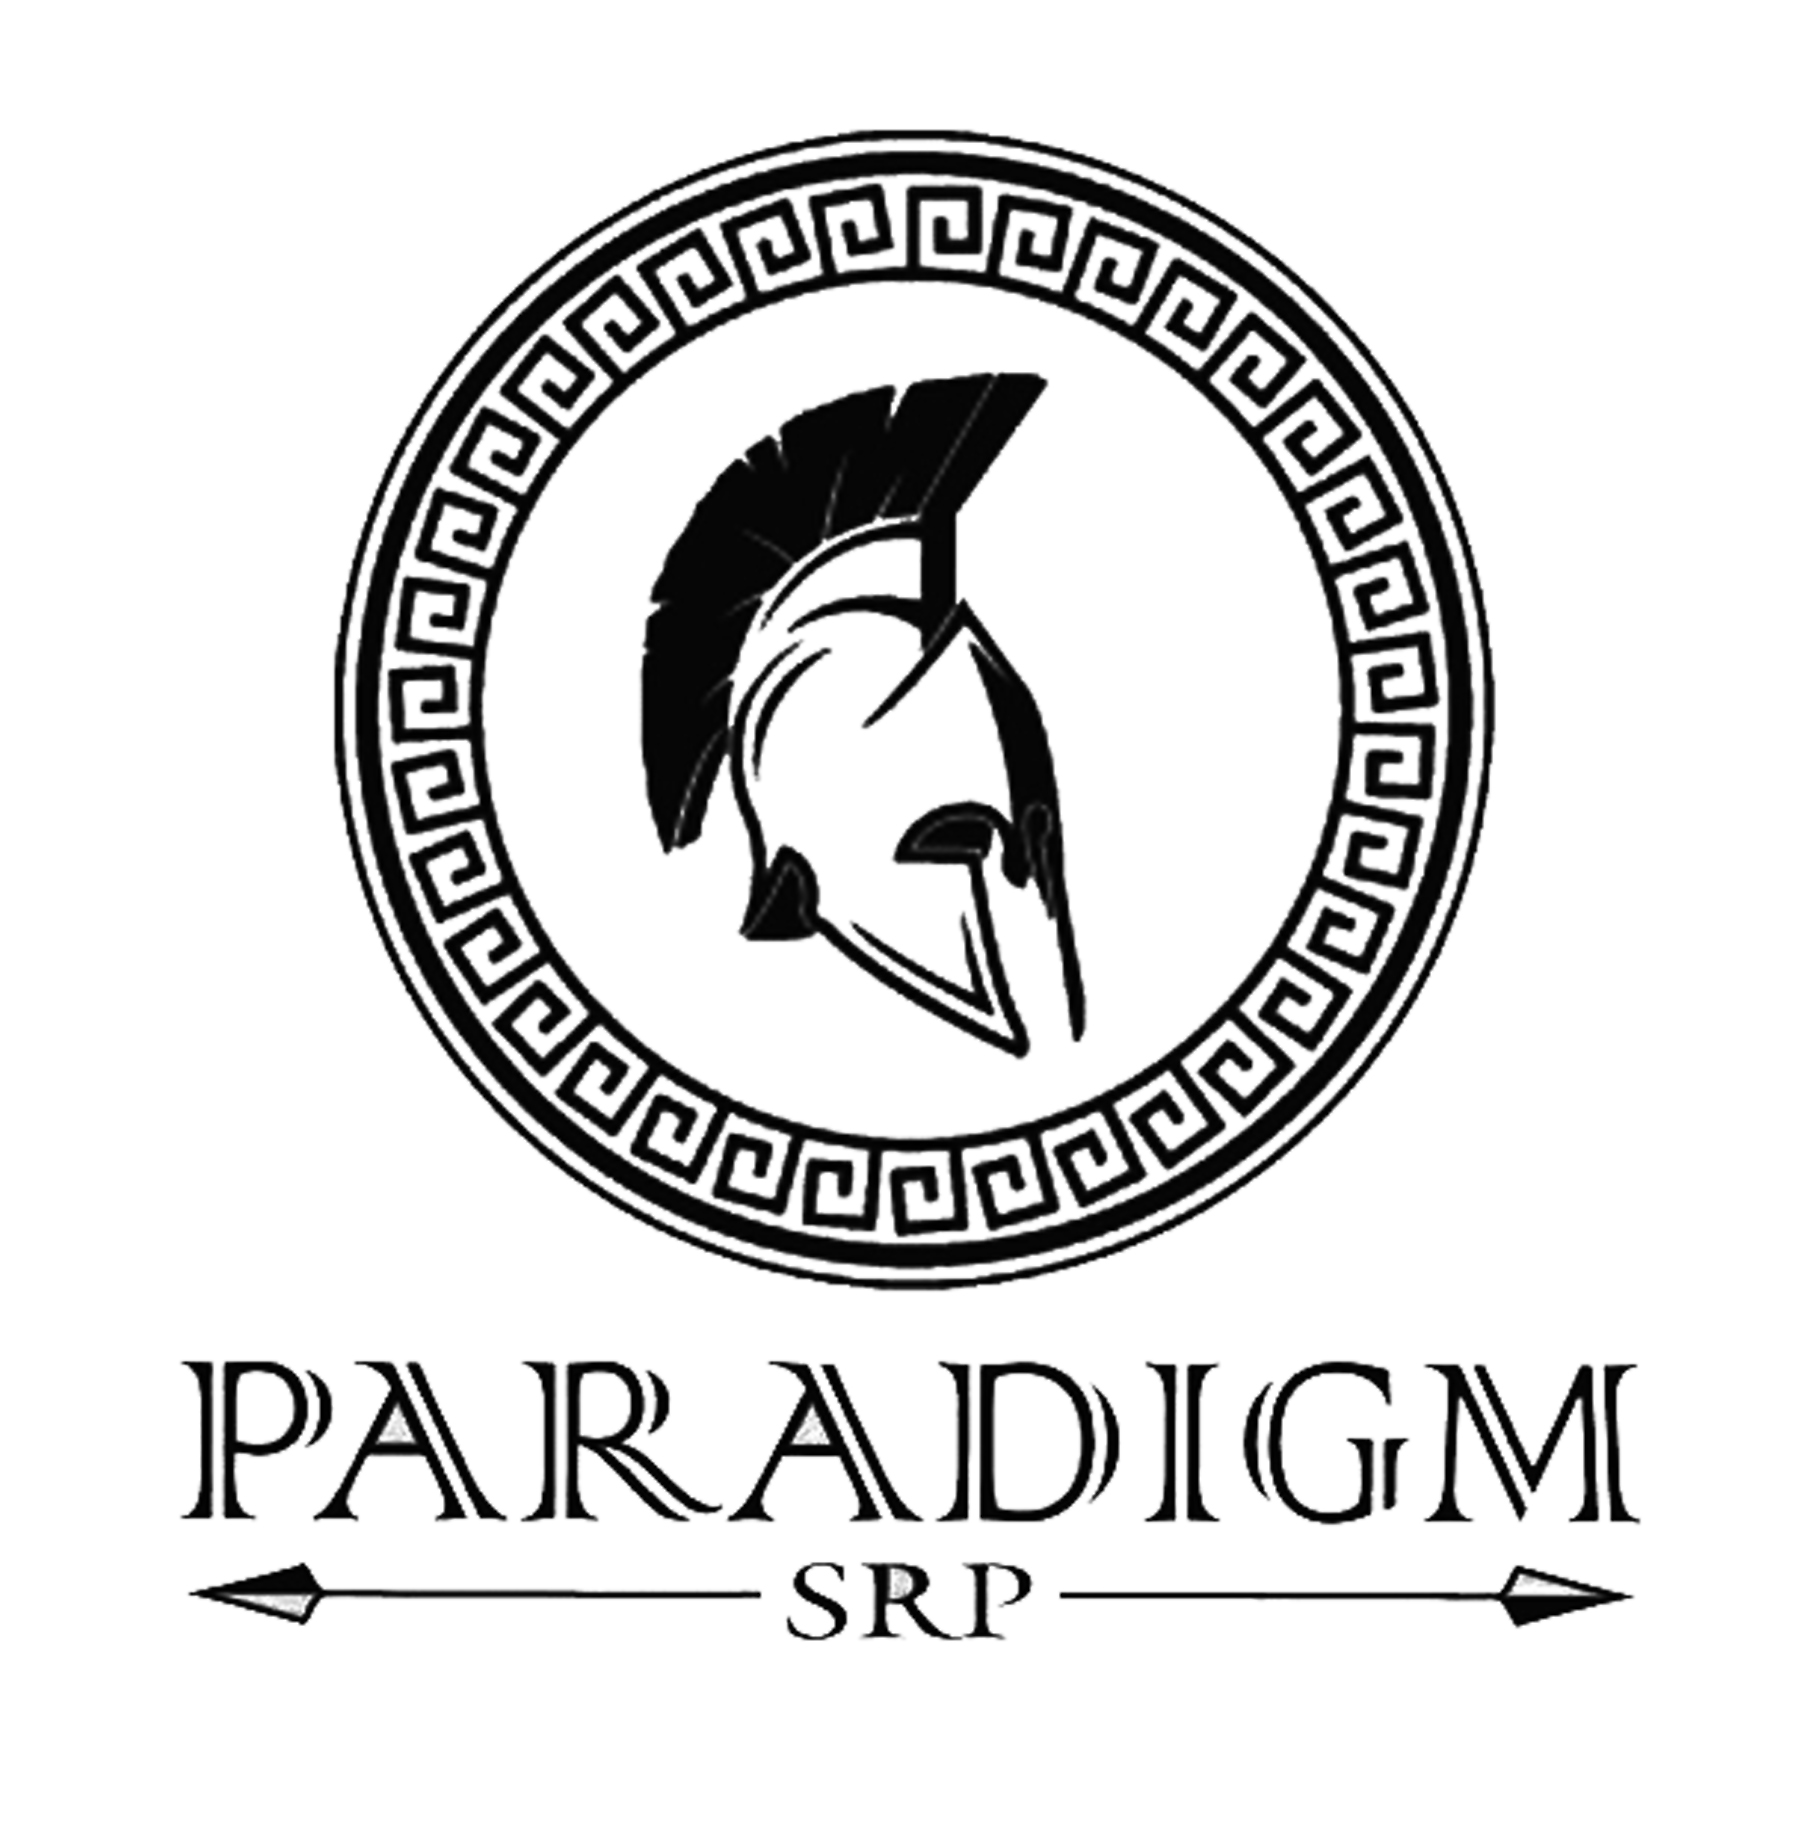 www.paradigmsrp.com